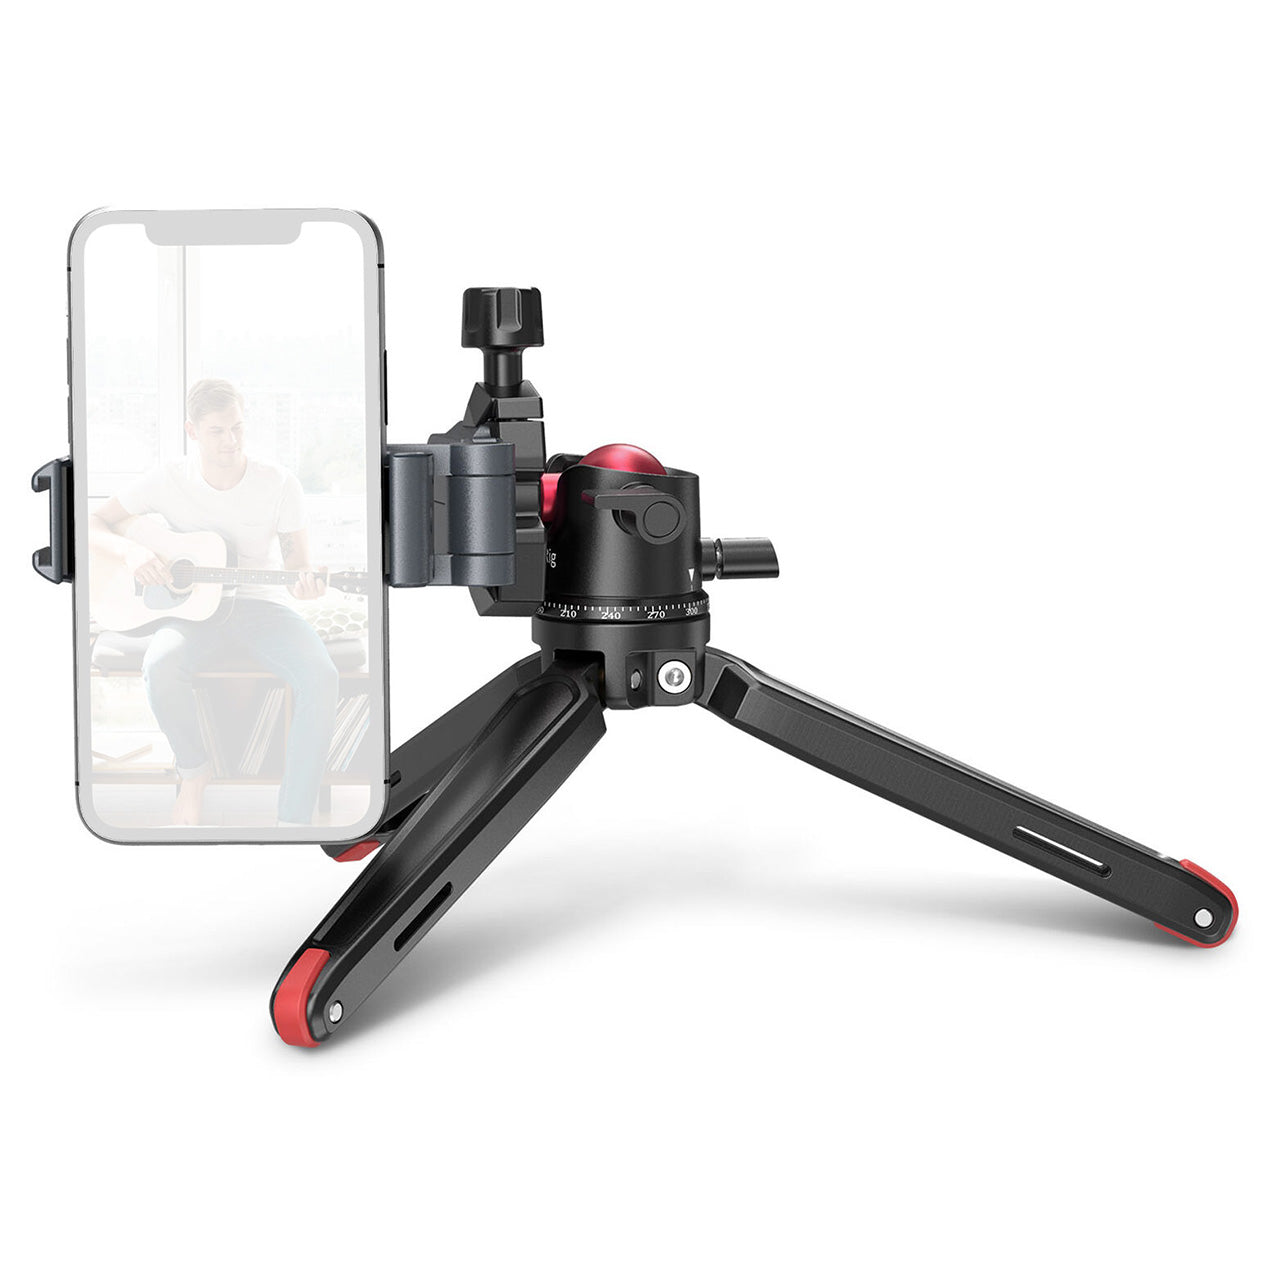 SmallRig Universal Smartphone Vlog Kit (Tabletop Mini Tripod with Panoramic Ball Head and Universal Smartphone Holder) (KGW111)